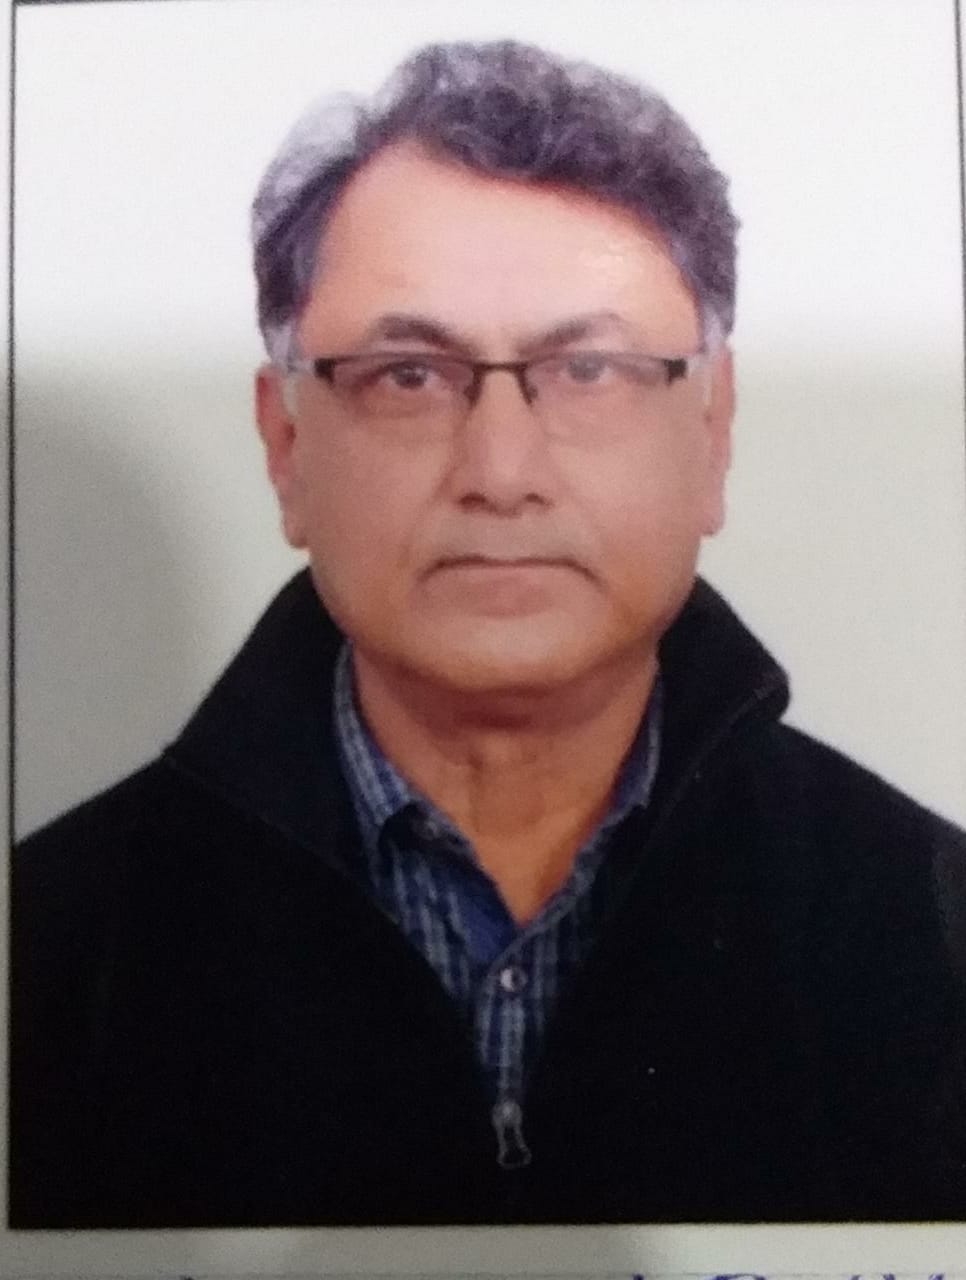 Dr. Dinesh Gupta